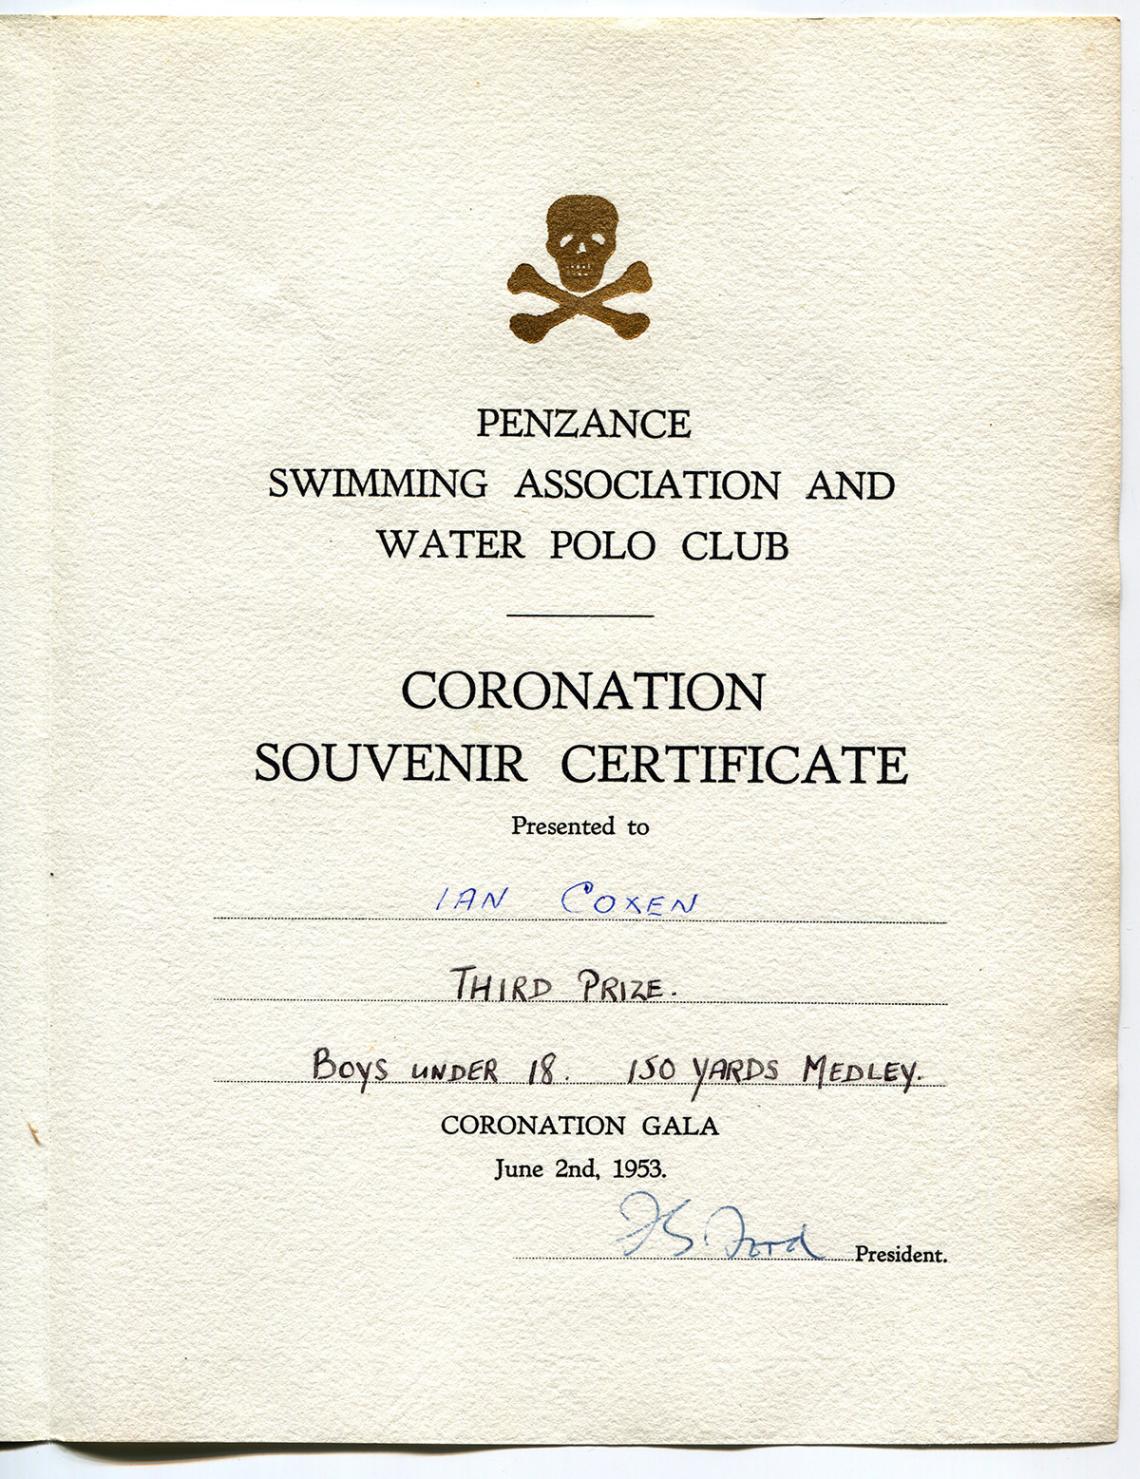 Coronation souvenir certificate